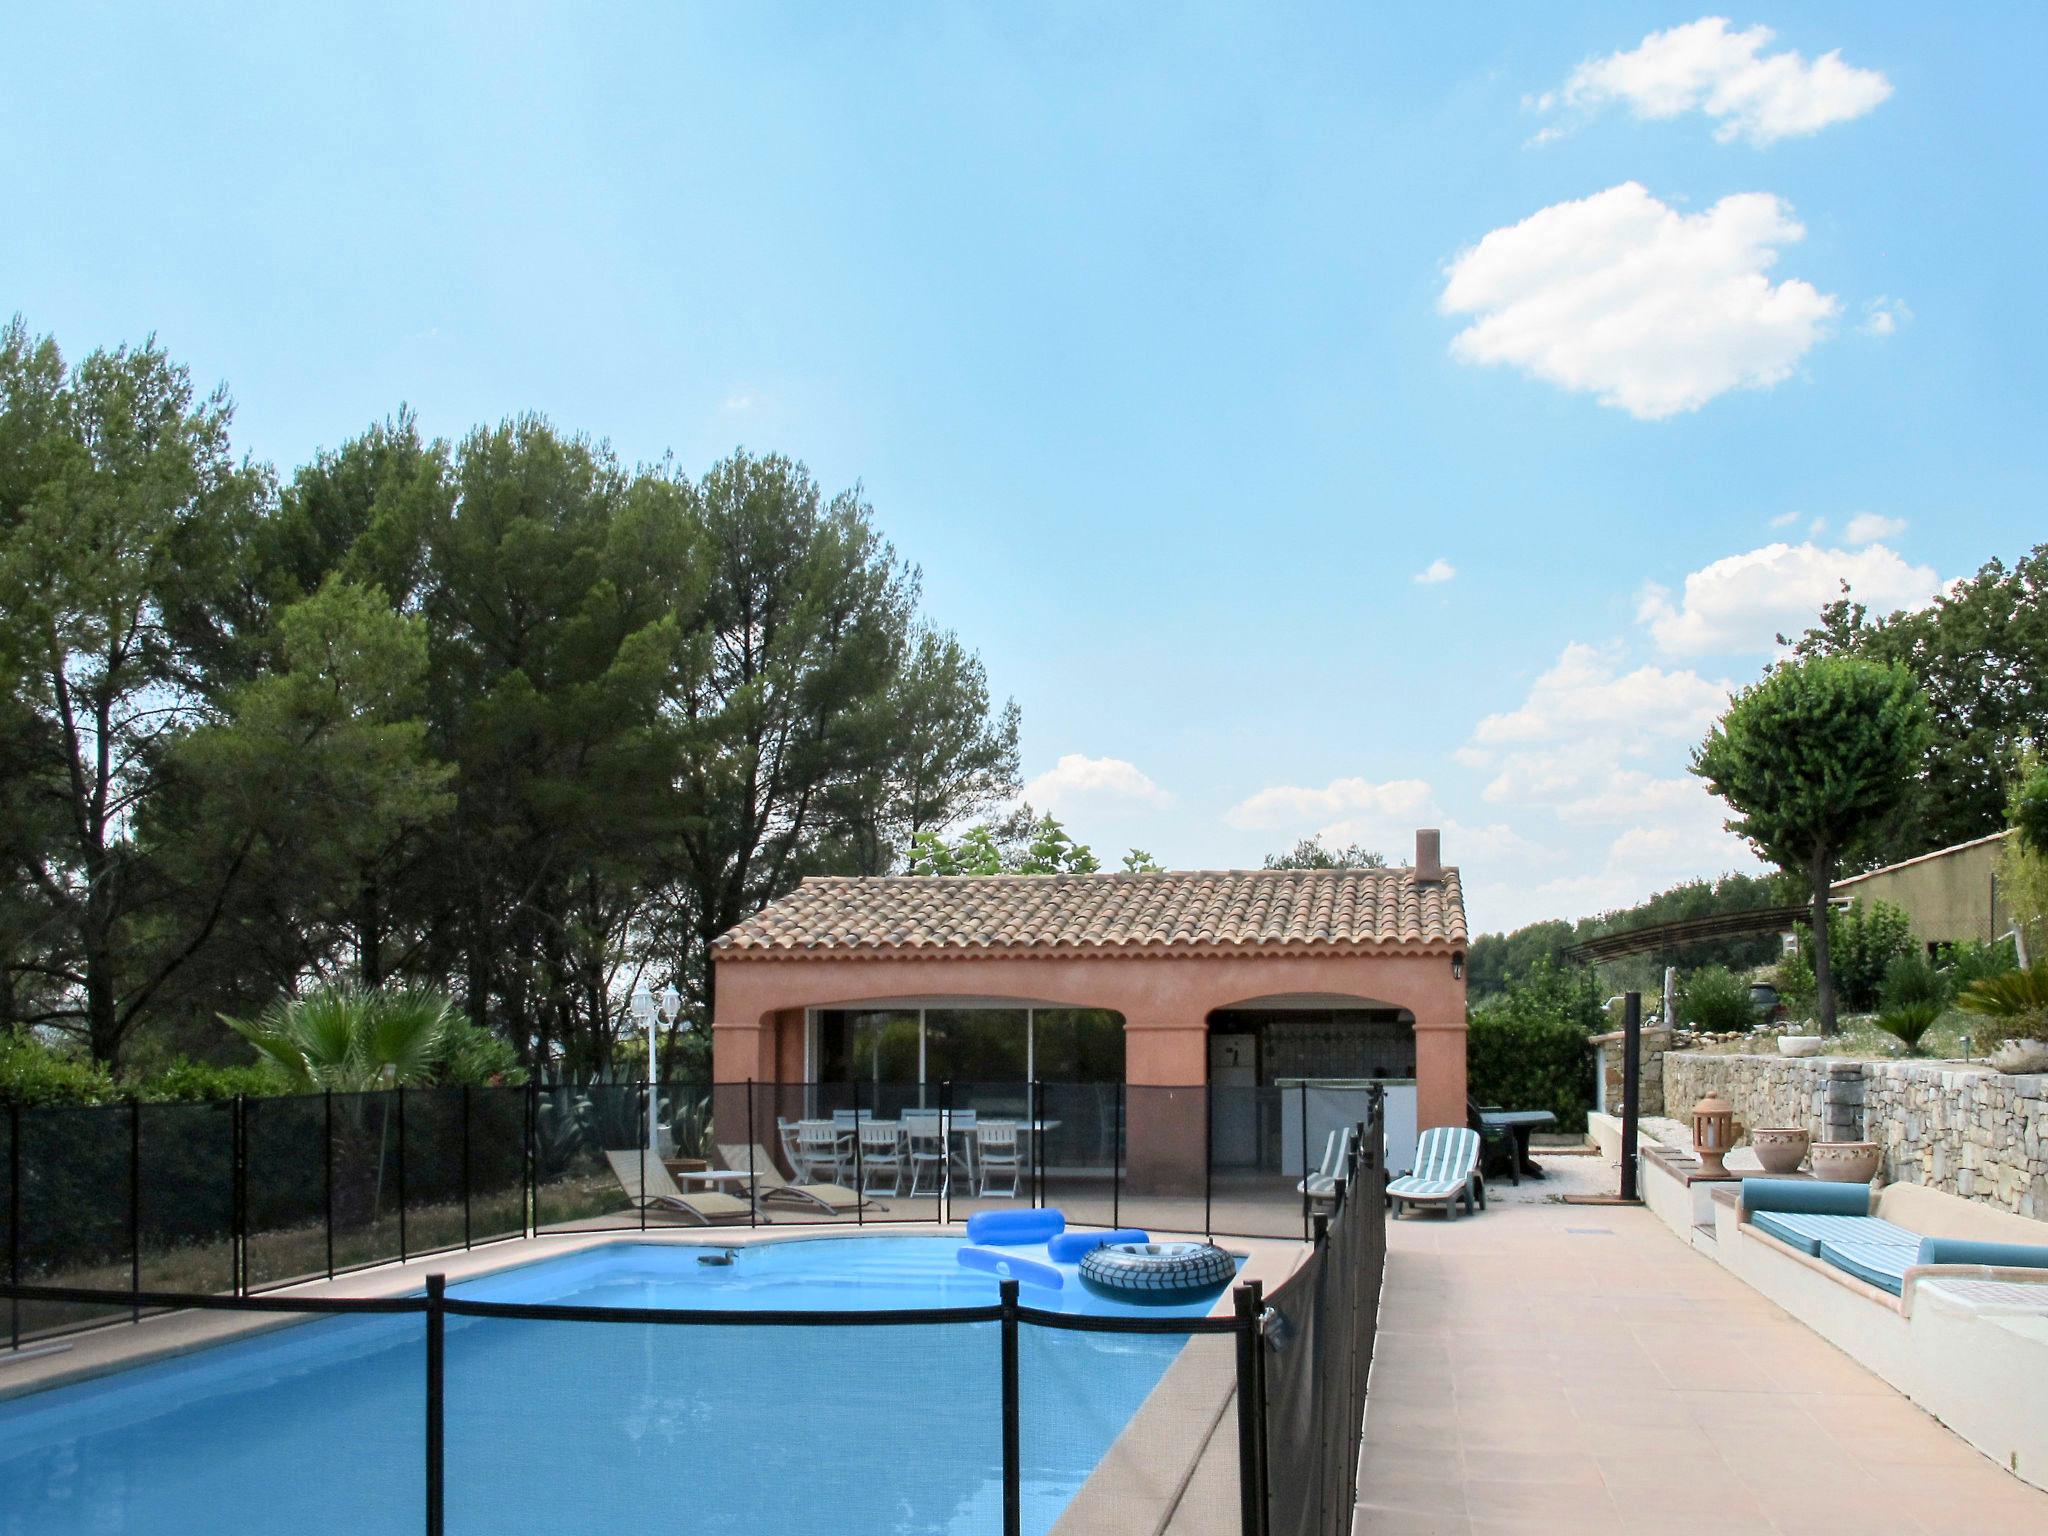 Foto 15 - Haus in Draguignan mit privater pool und terrasse